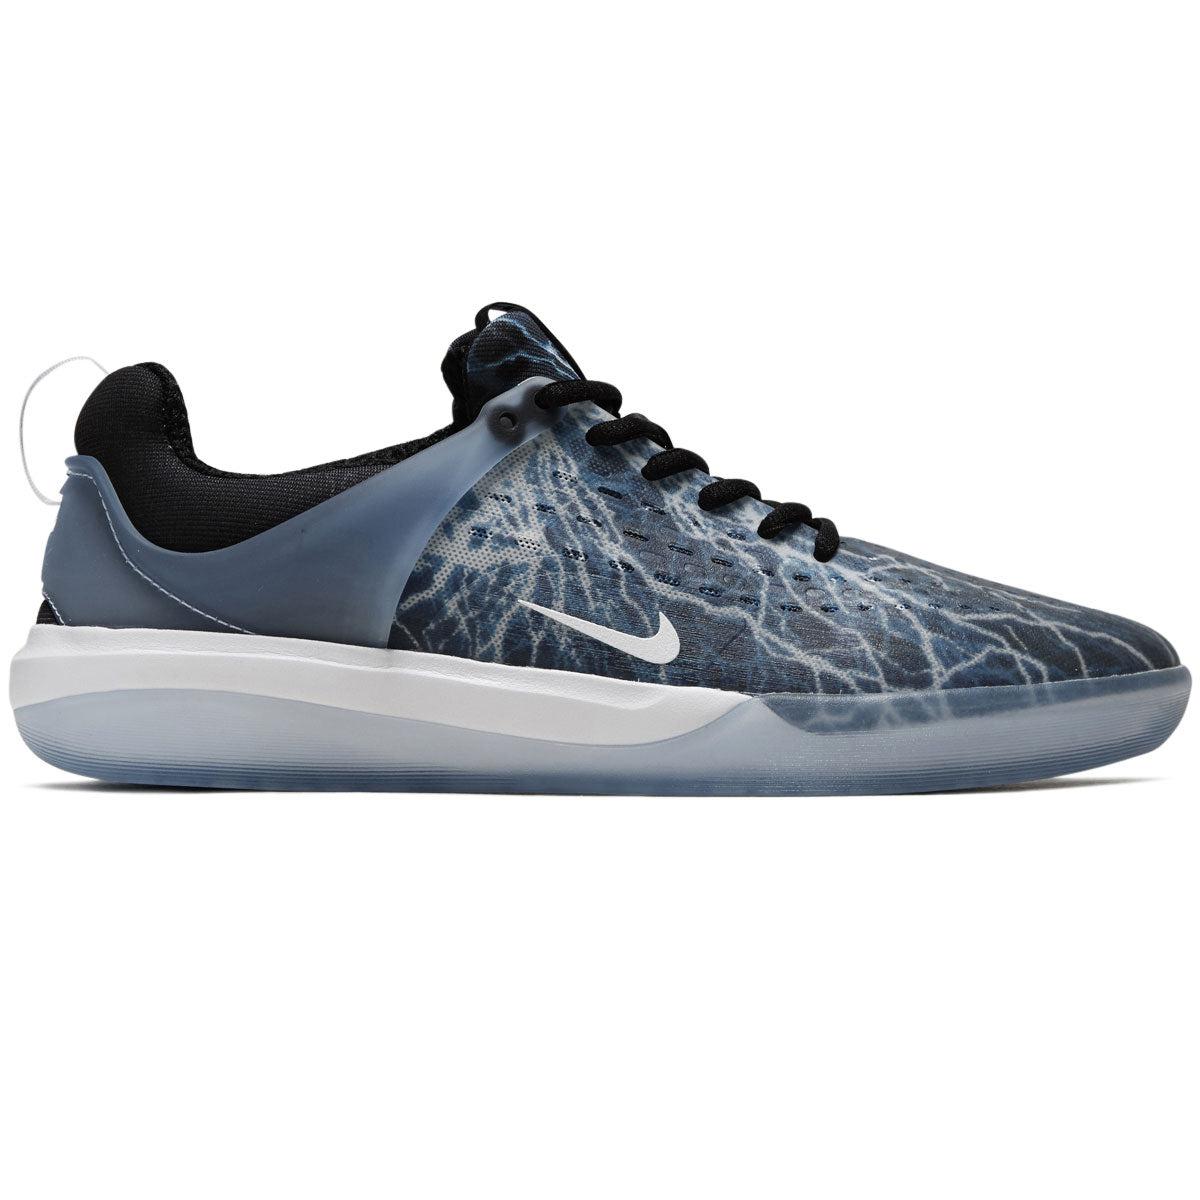 Nike SB Nyjah 3 Premium Shoes - Black/White/Deep Royal/White image 1